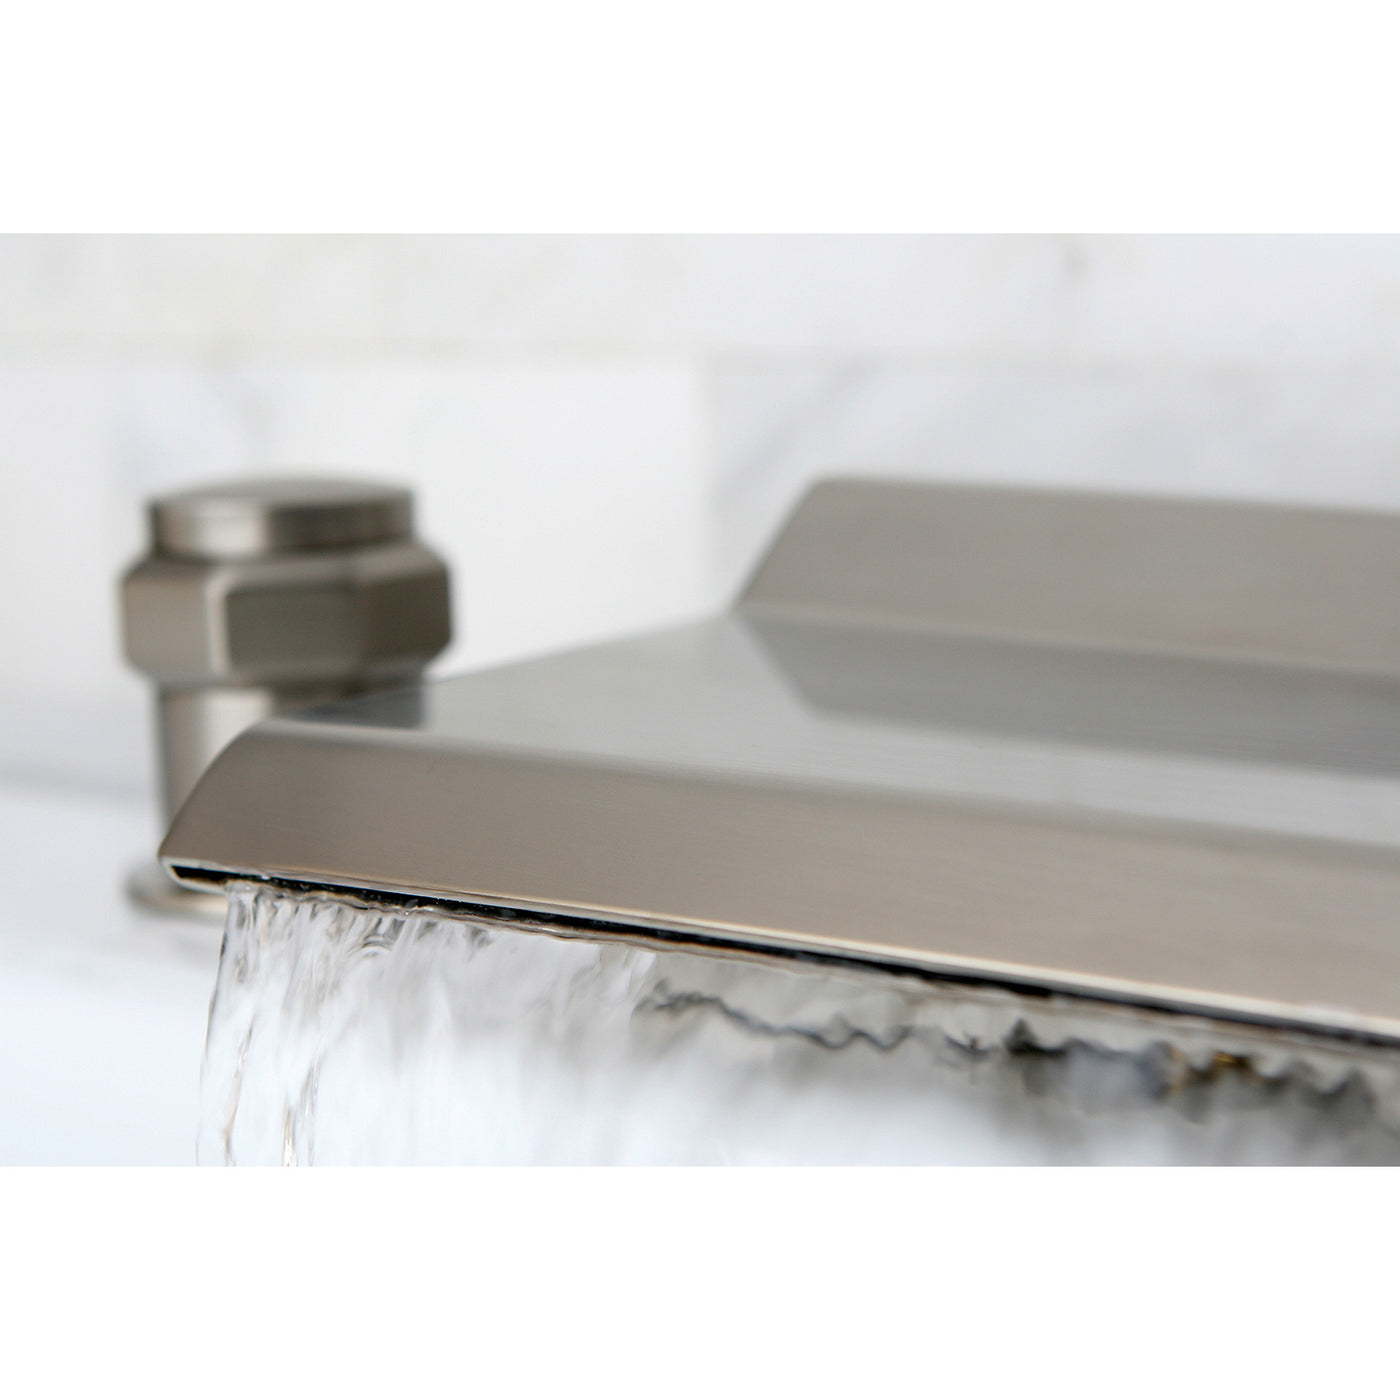 Elements of Design ES2248AR Roman Tub Faucet, Brushed Nickel